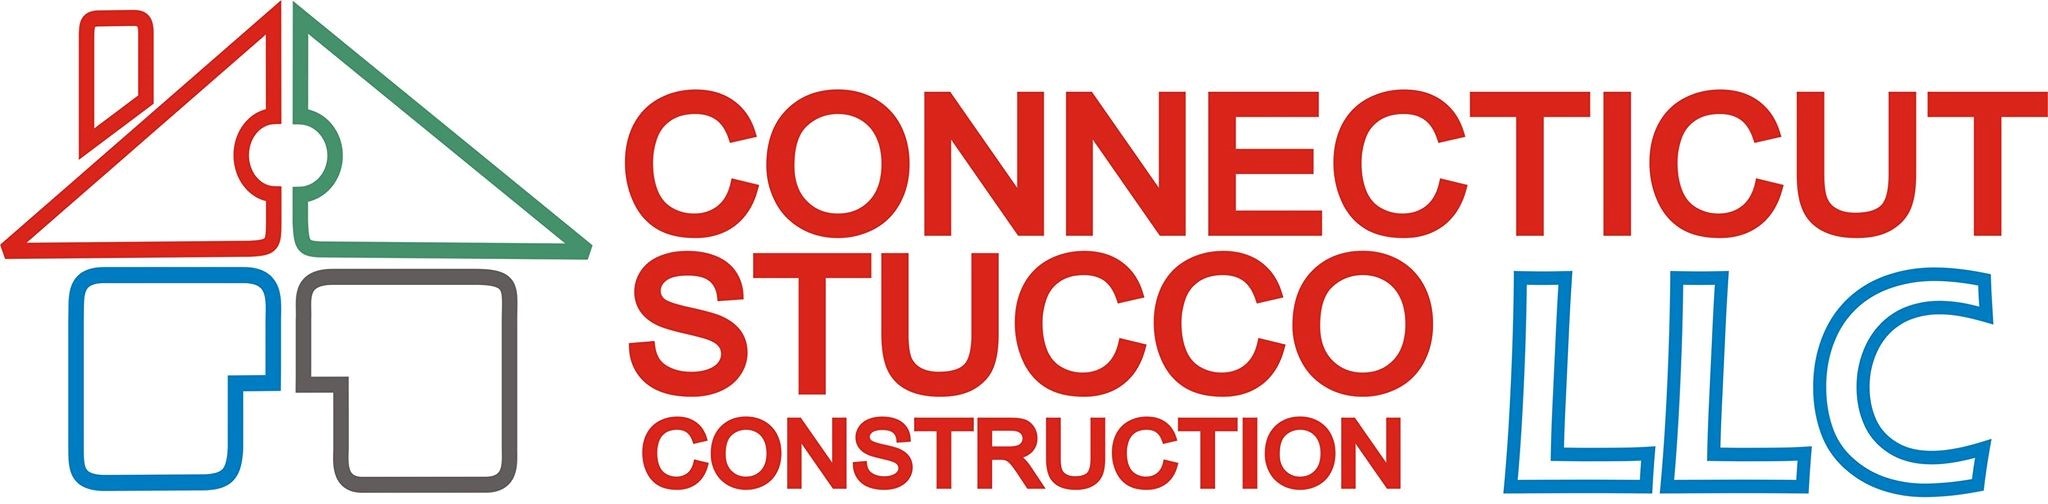 Connecticut Stucco Construction, LLC Logo